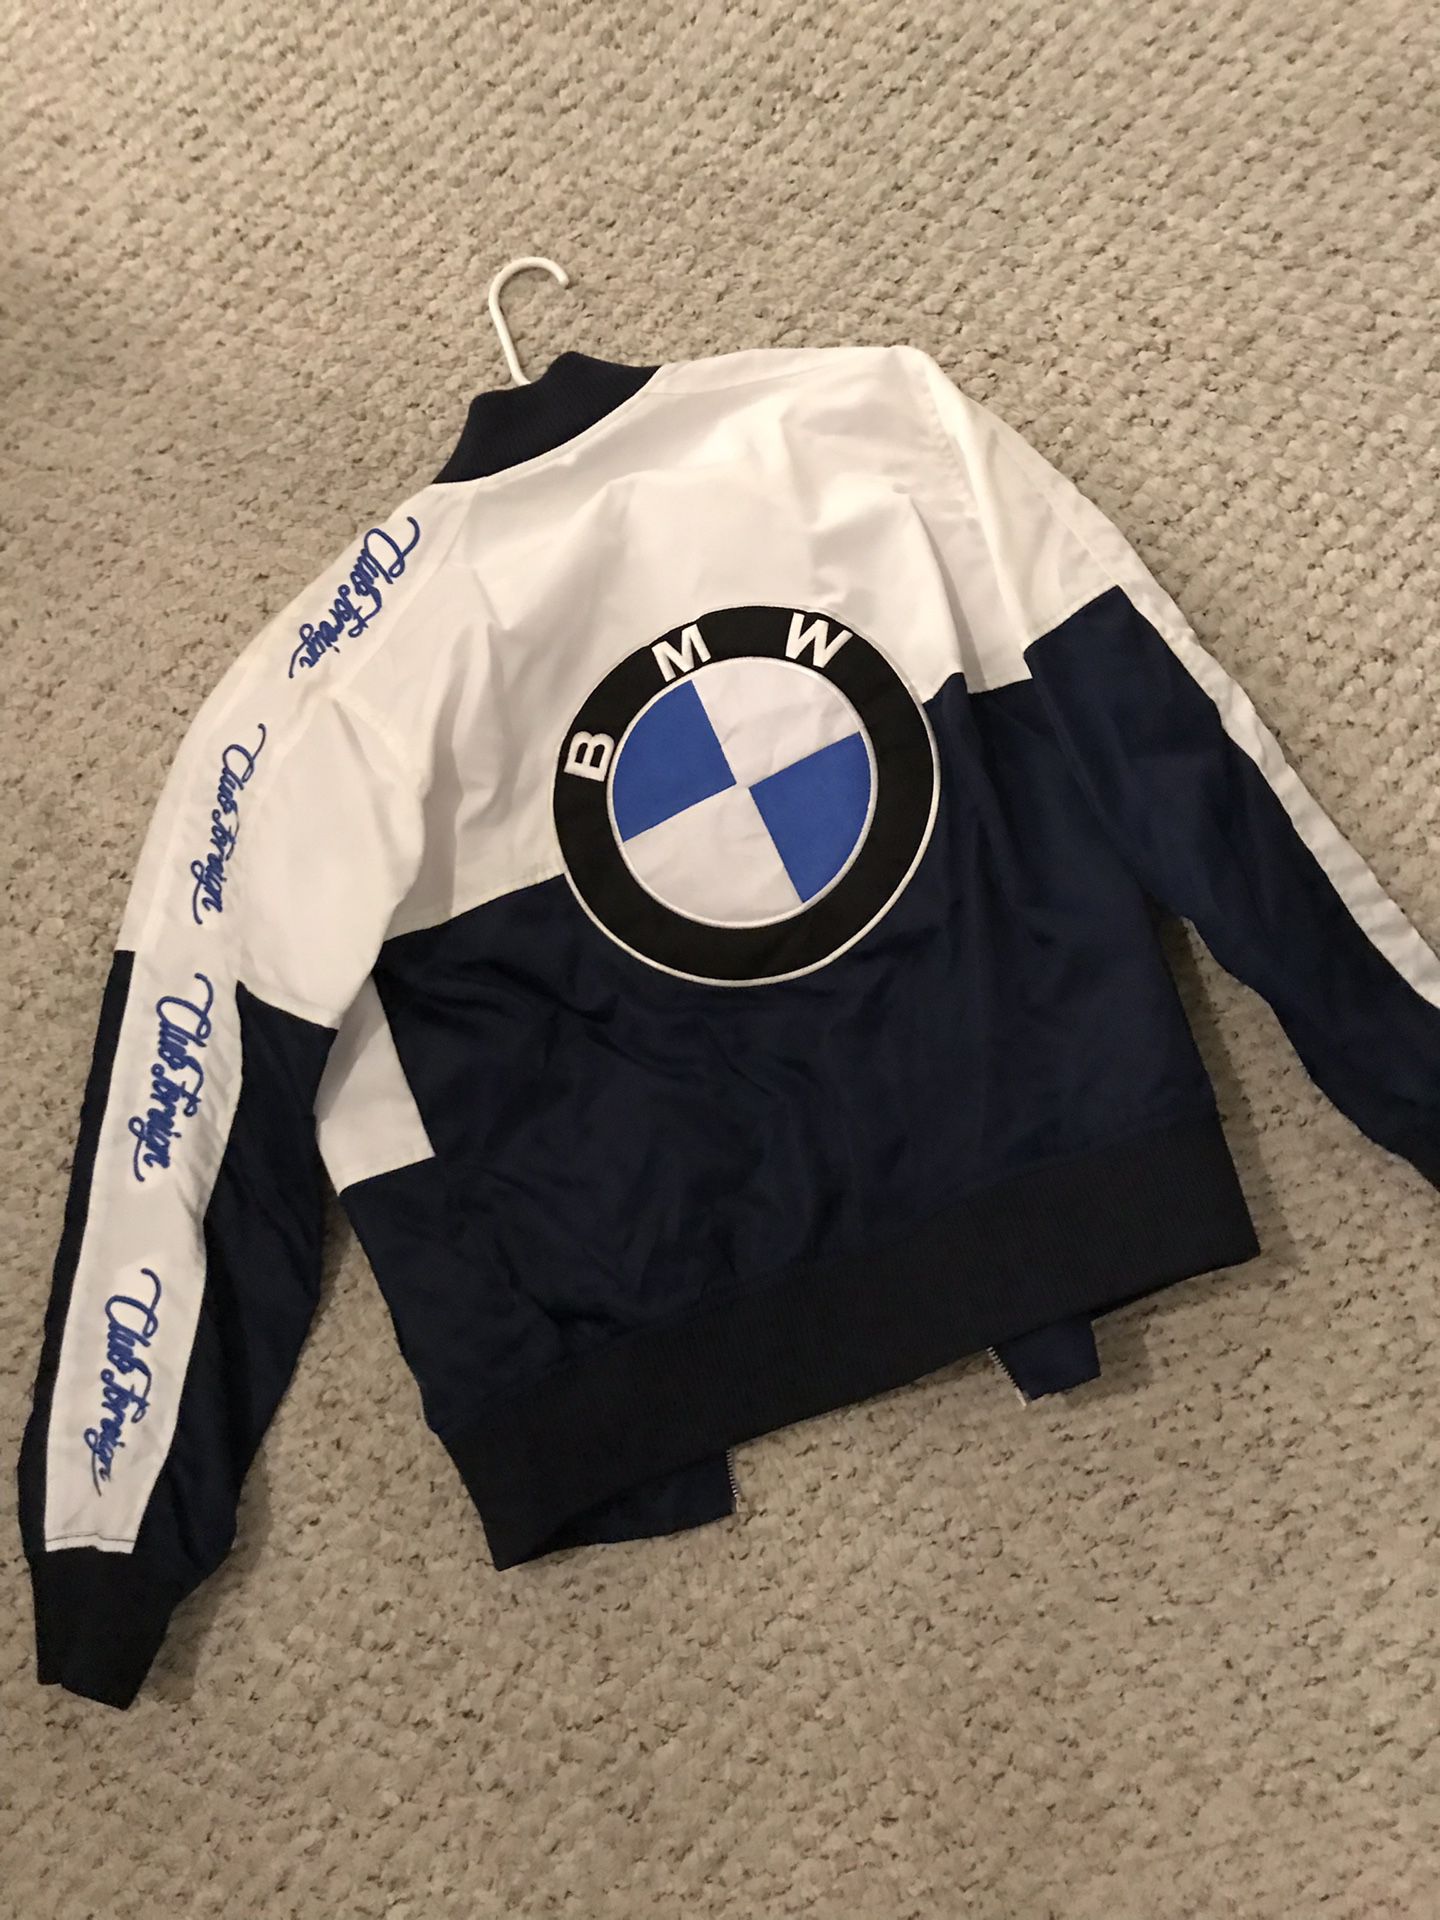 Club Foreign BMW jacket size Medium